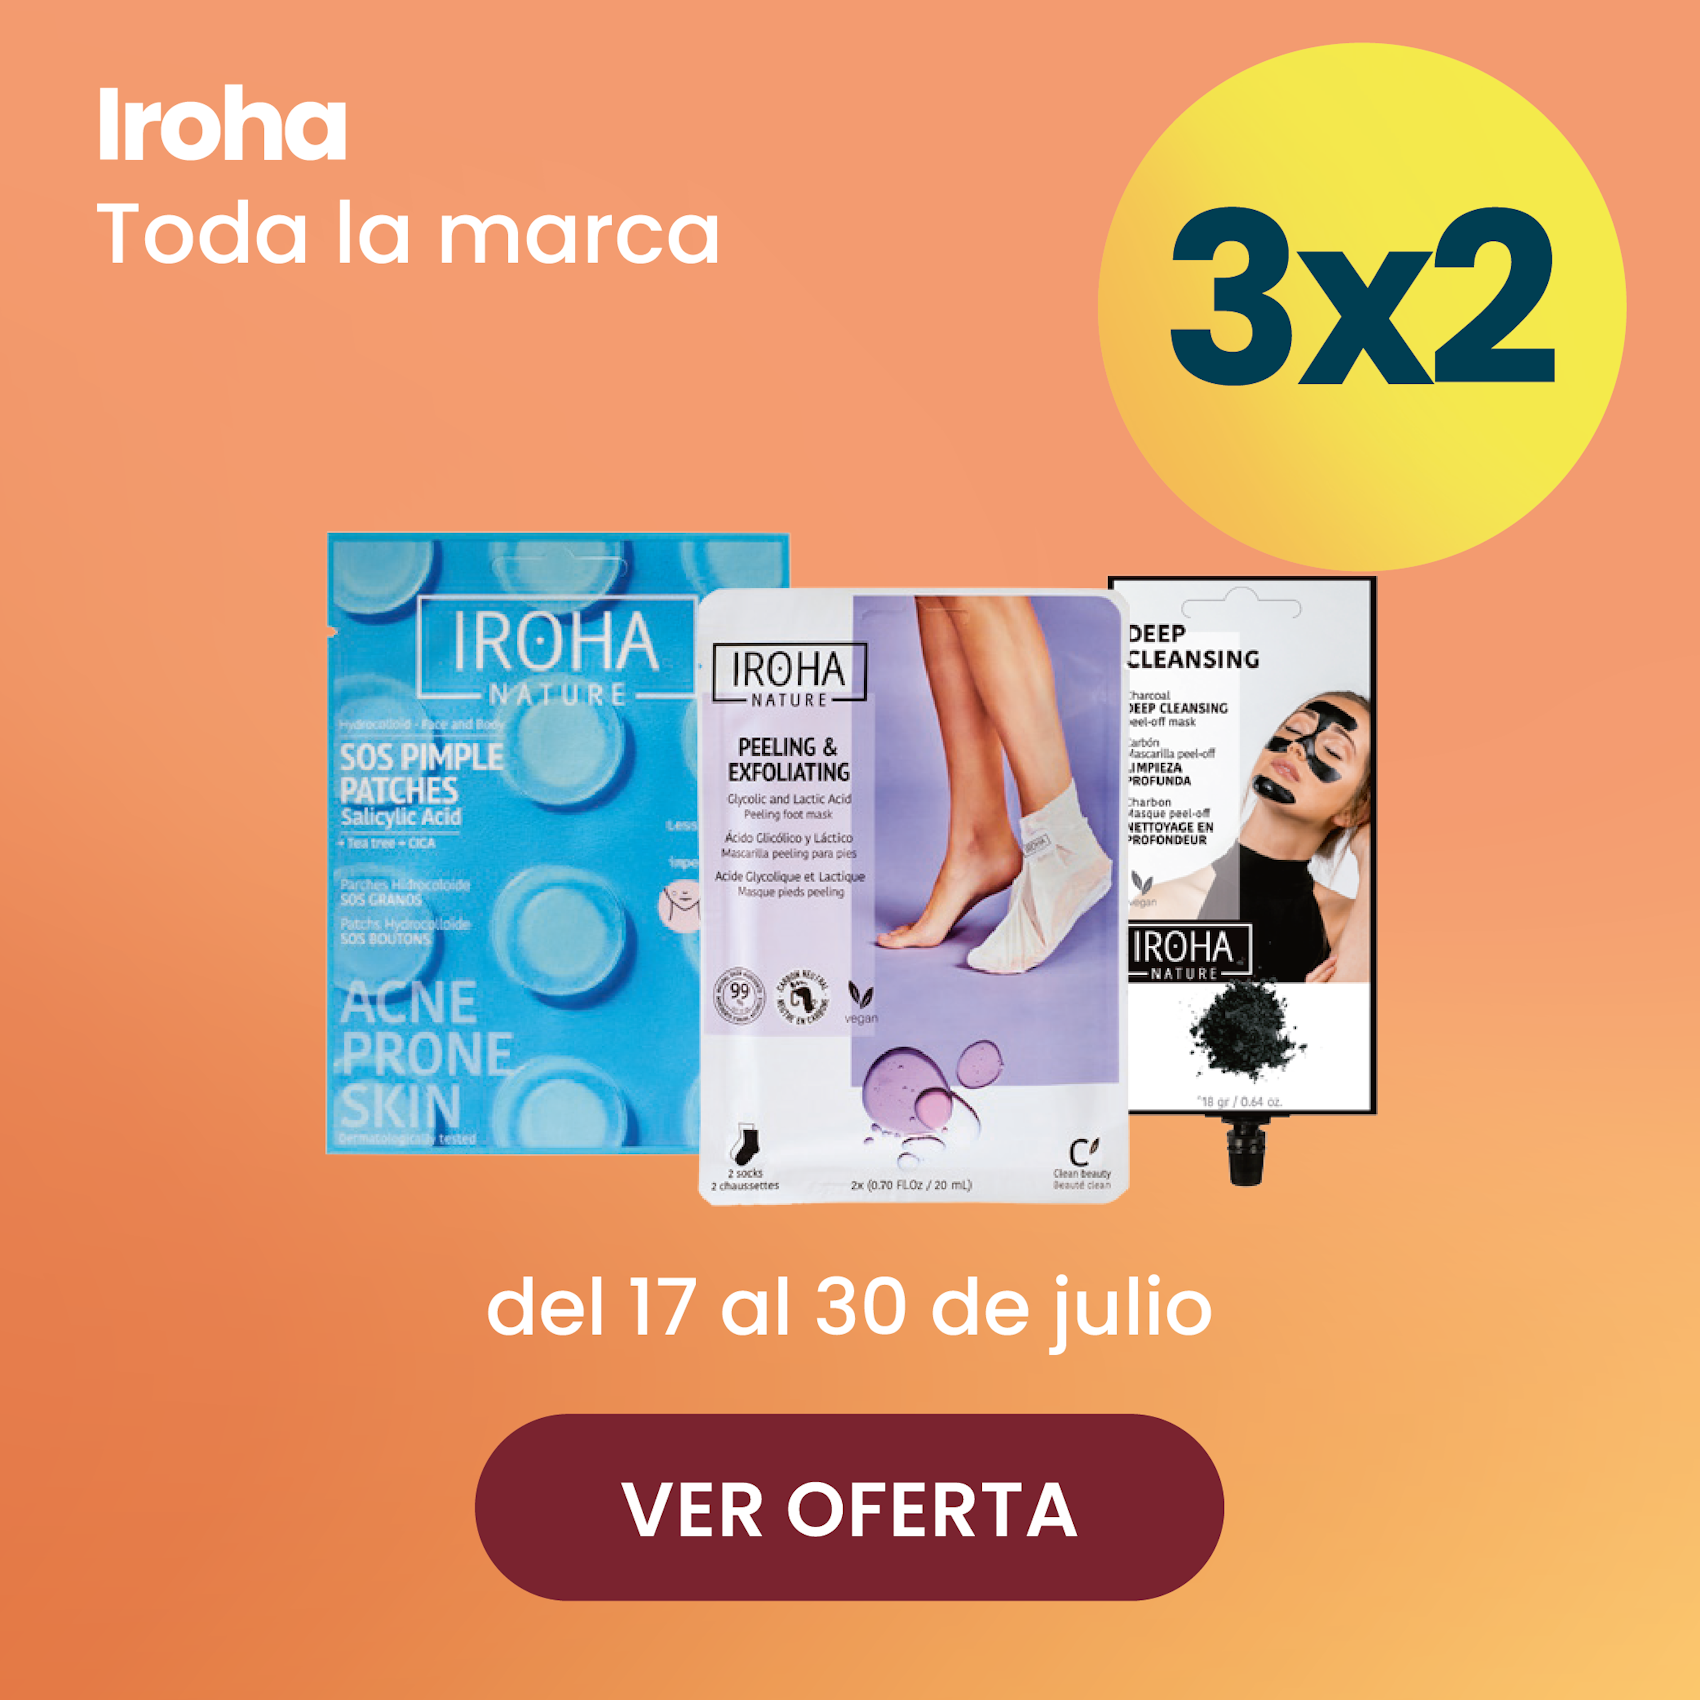 IROHA TODA LA MARCA 3x2